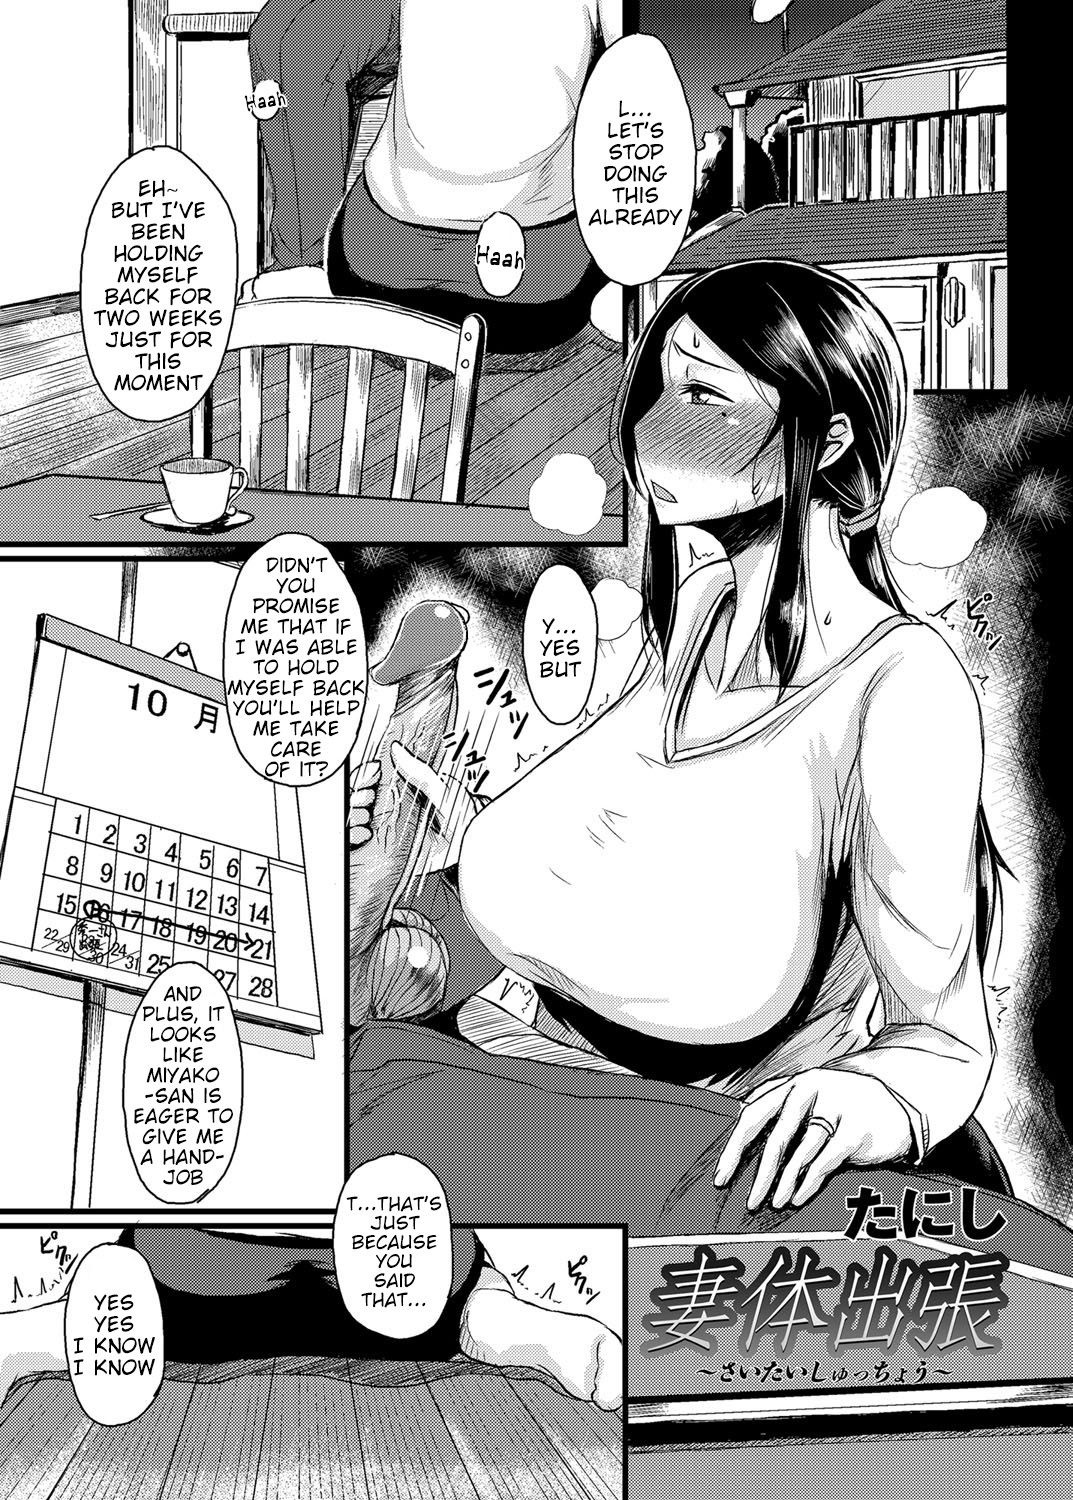 Hentai Manga Comic-A Wife's Business Trip-Read-1